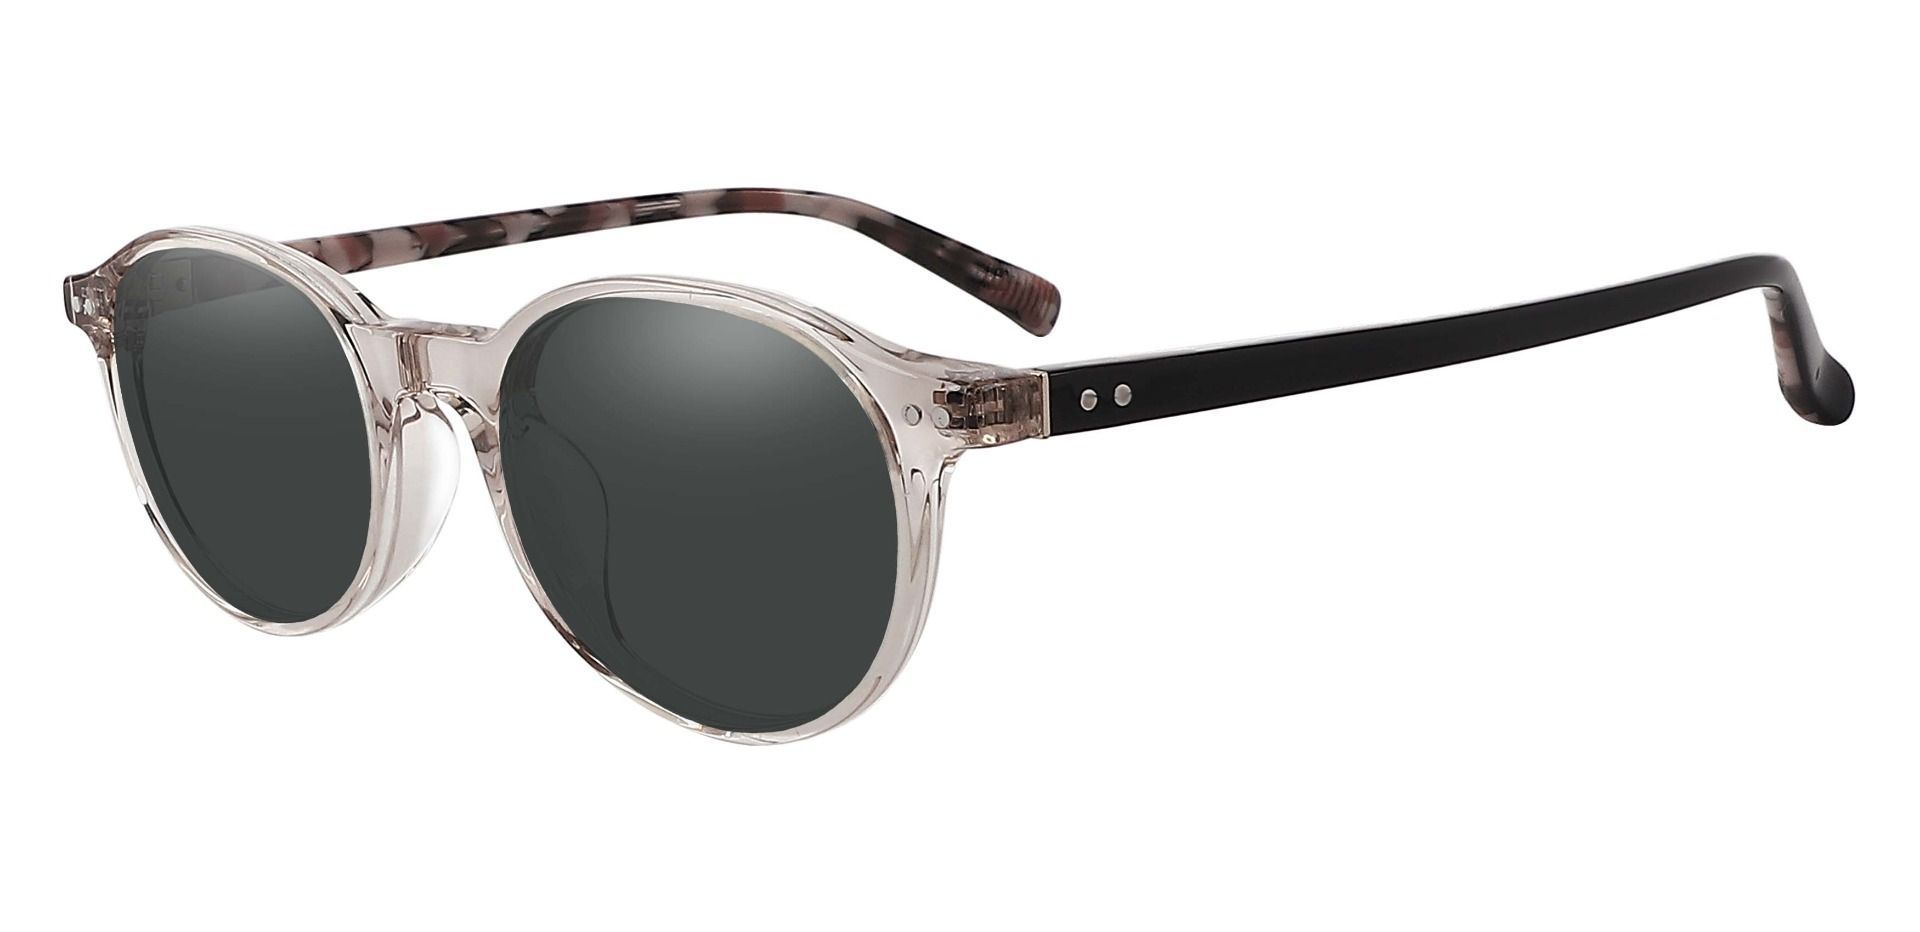 Avon Oval Progressive Sunglasses - Clear Frame With Gray Lenses